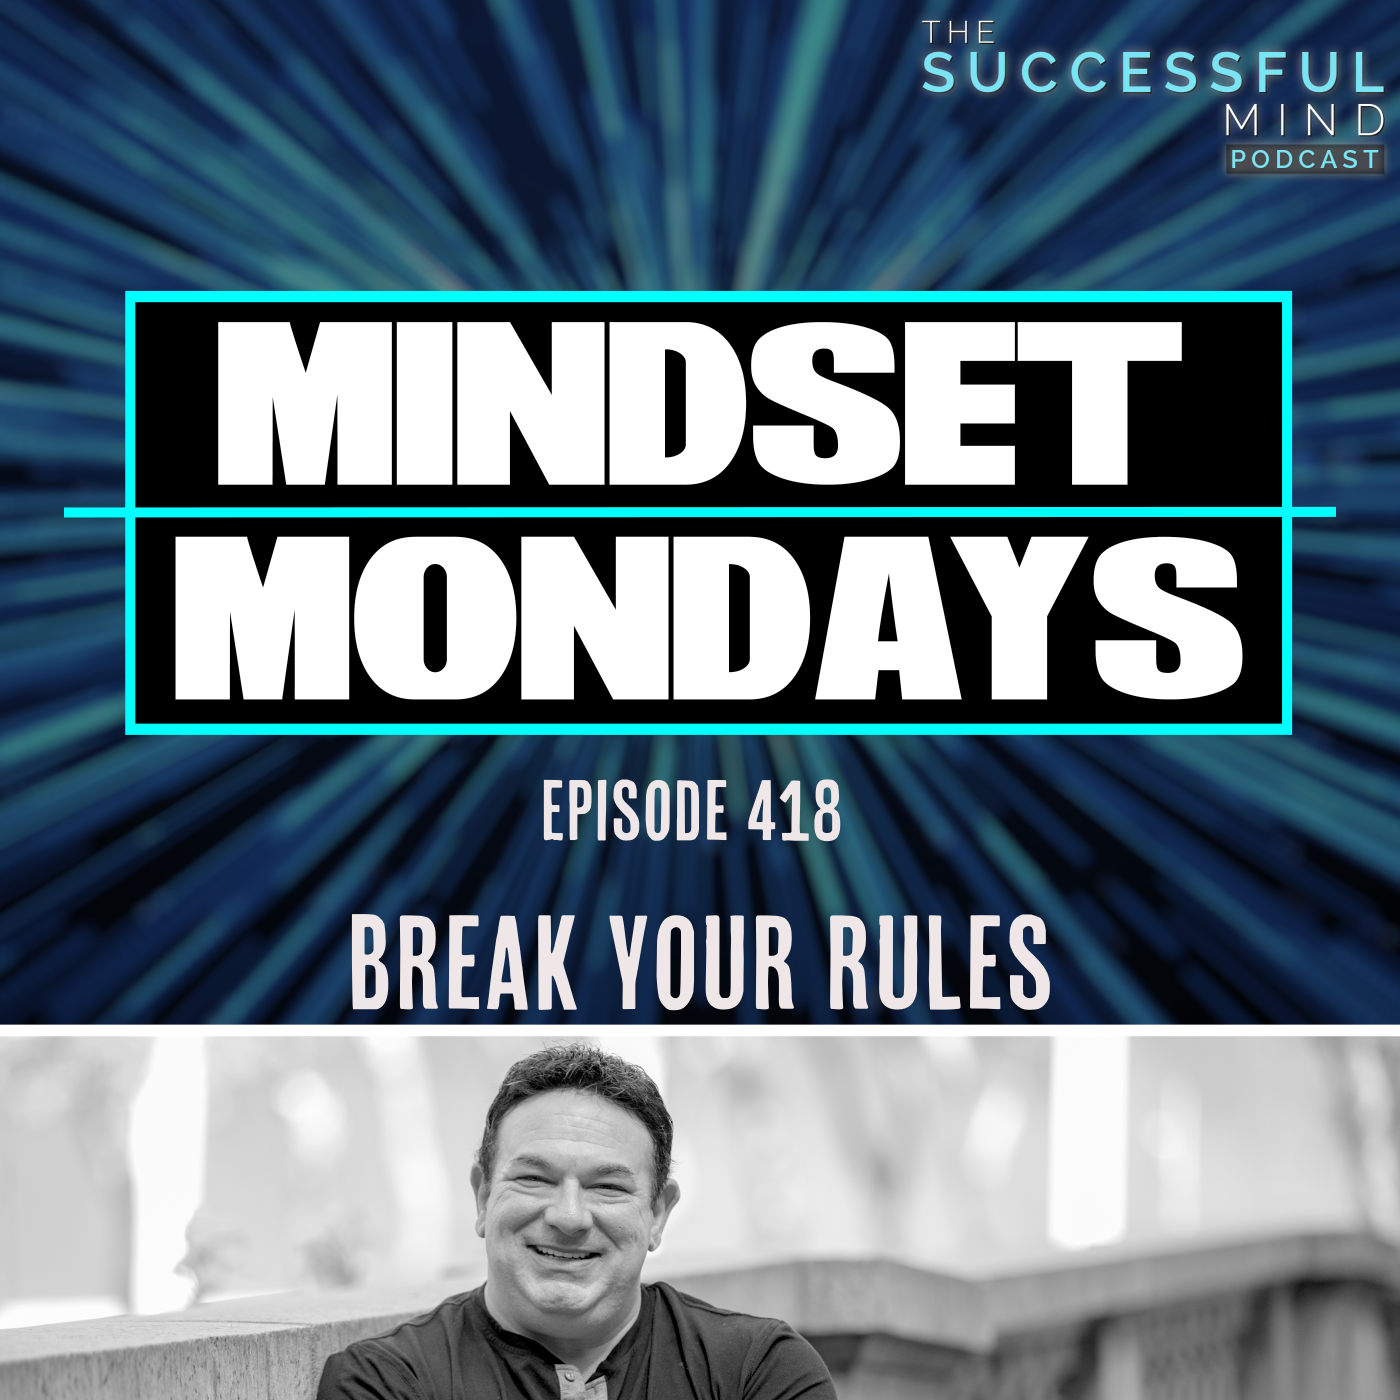 The Successful Mind Podcast - Episode 418 - Mindset Mondays - Break Your Rules